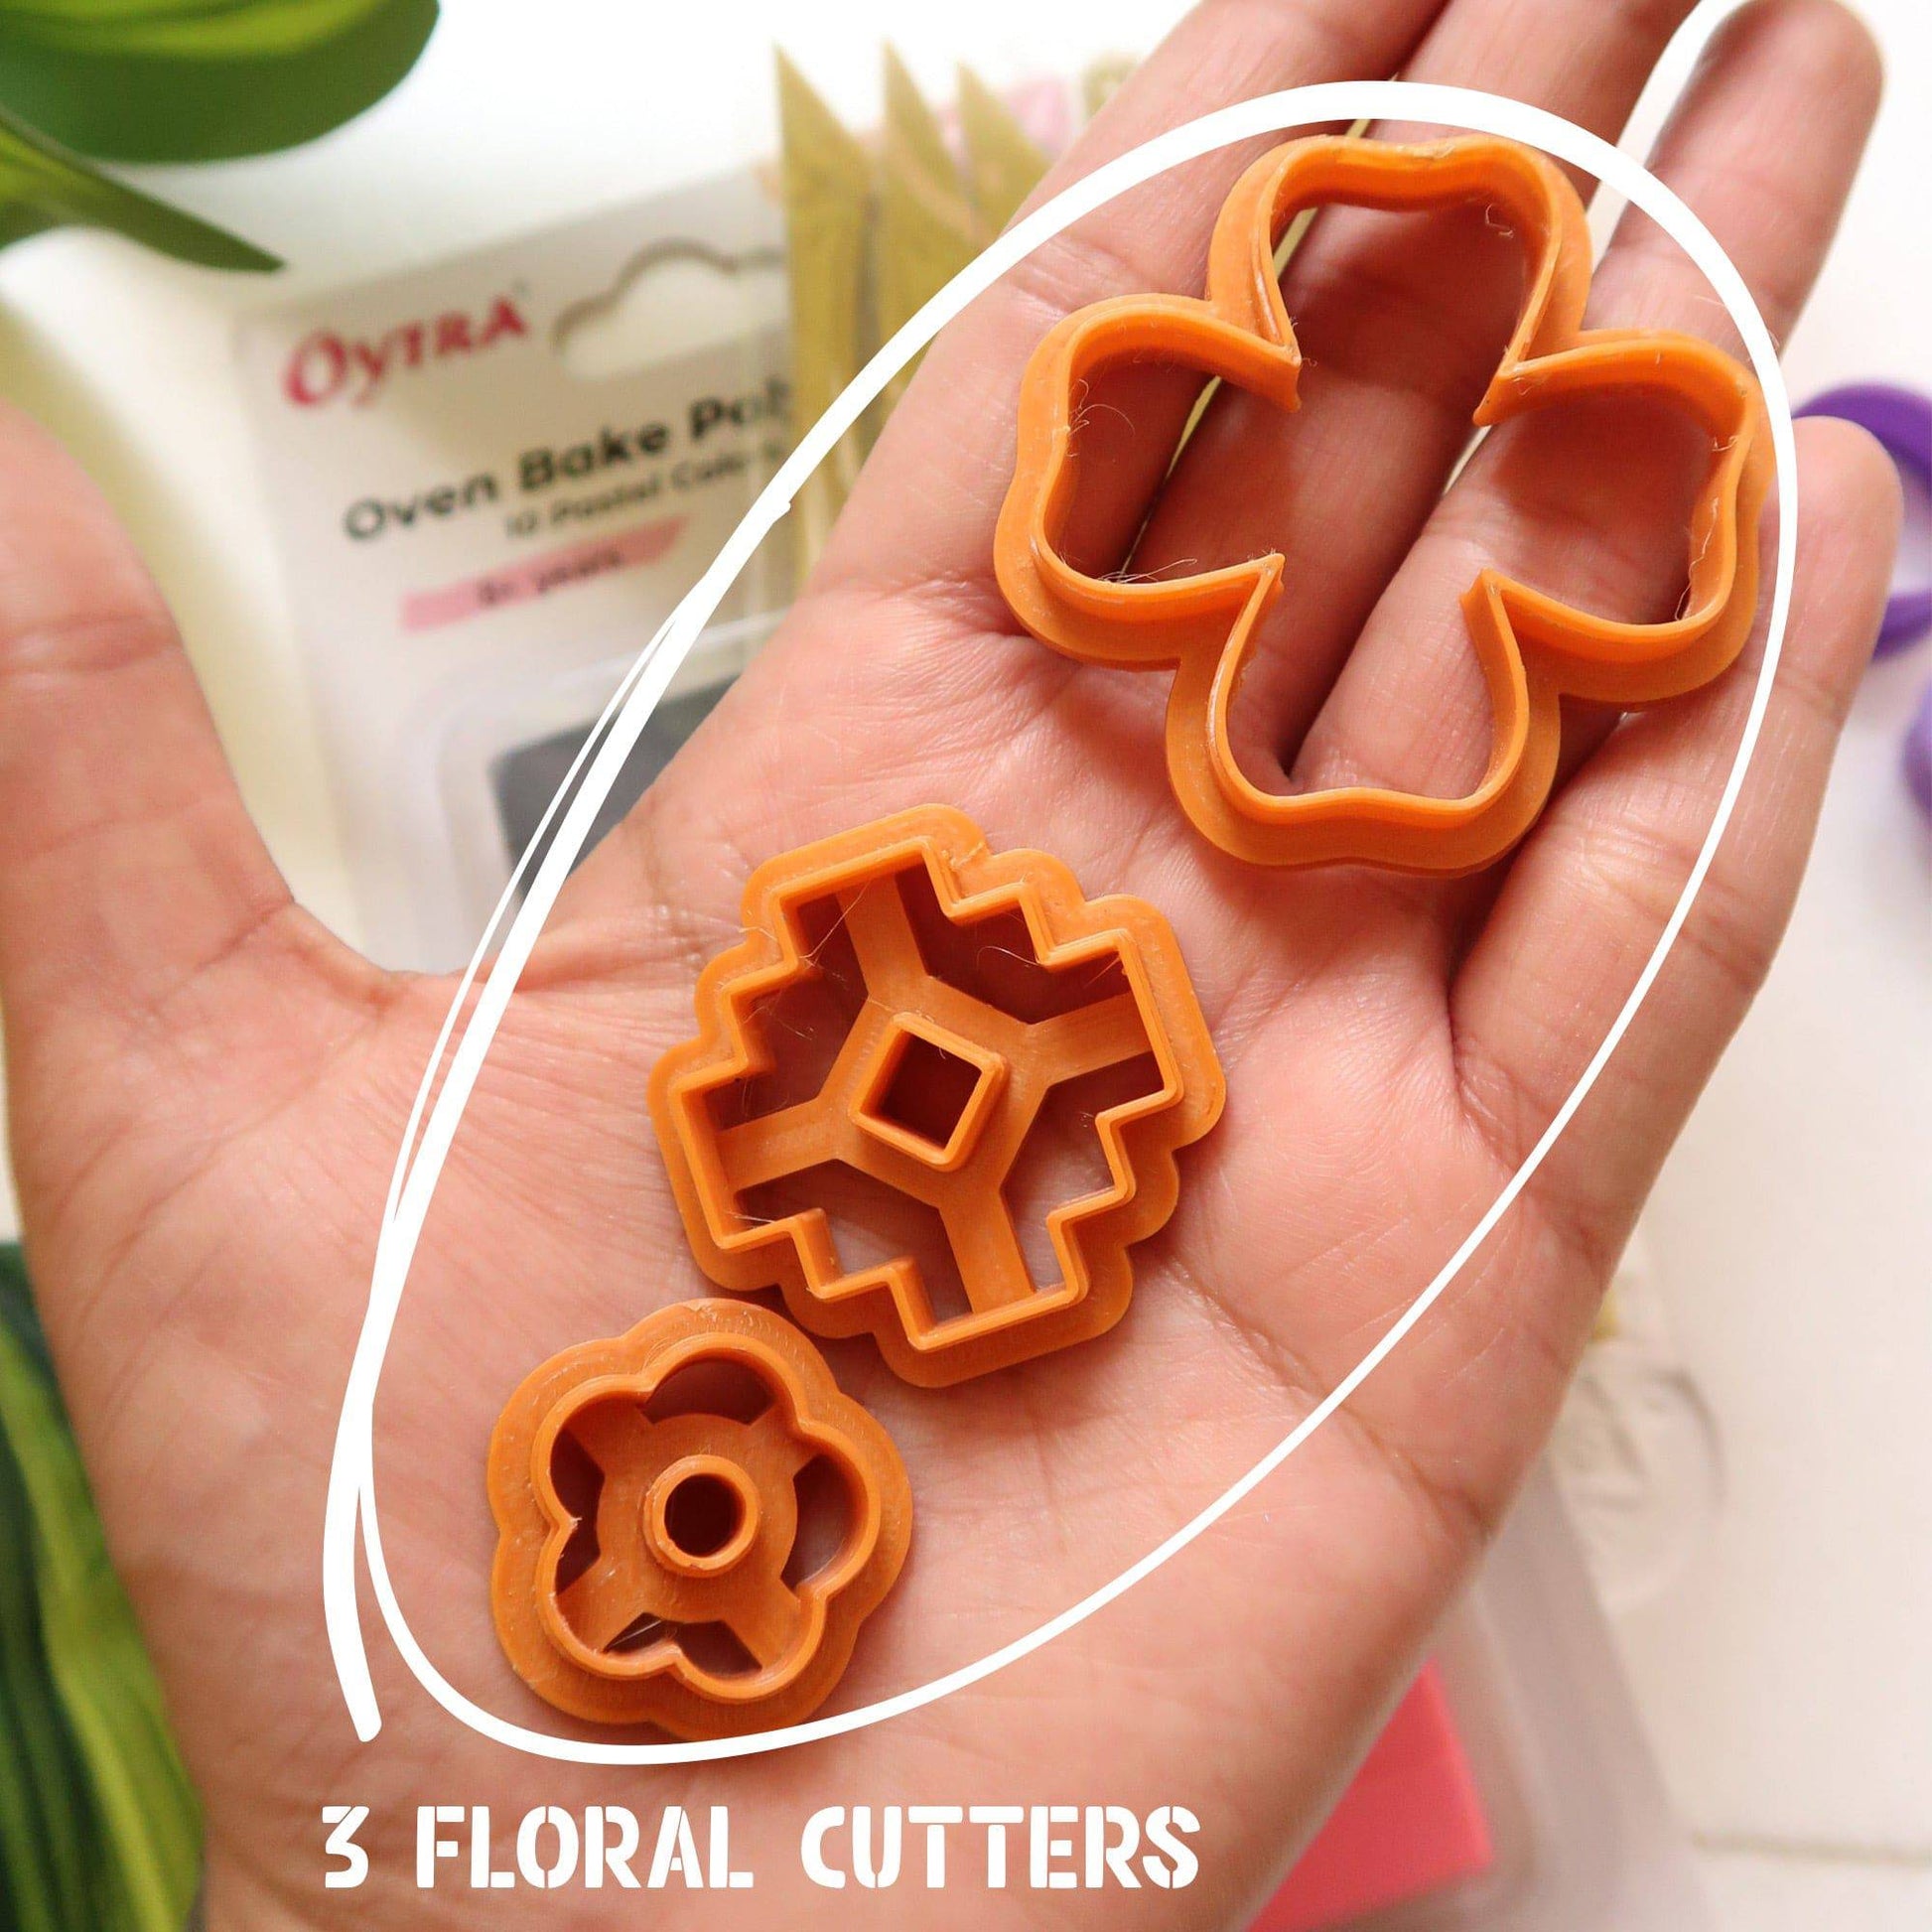 Beginners Polymer Clay Kit - ClartStudios - Polymer clay Jewellery